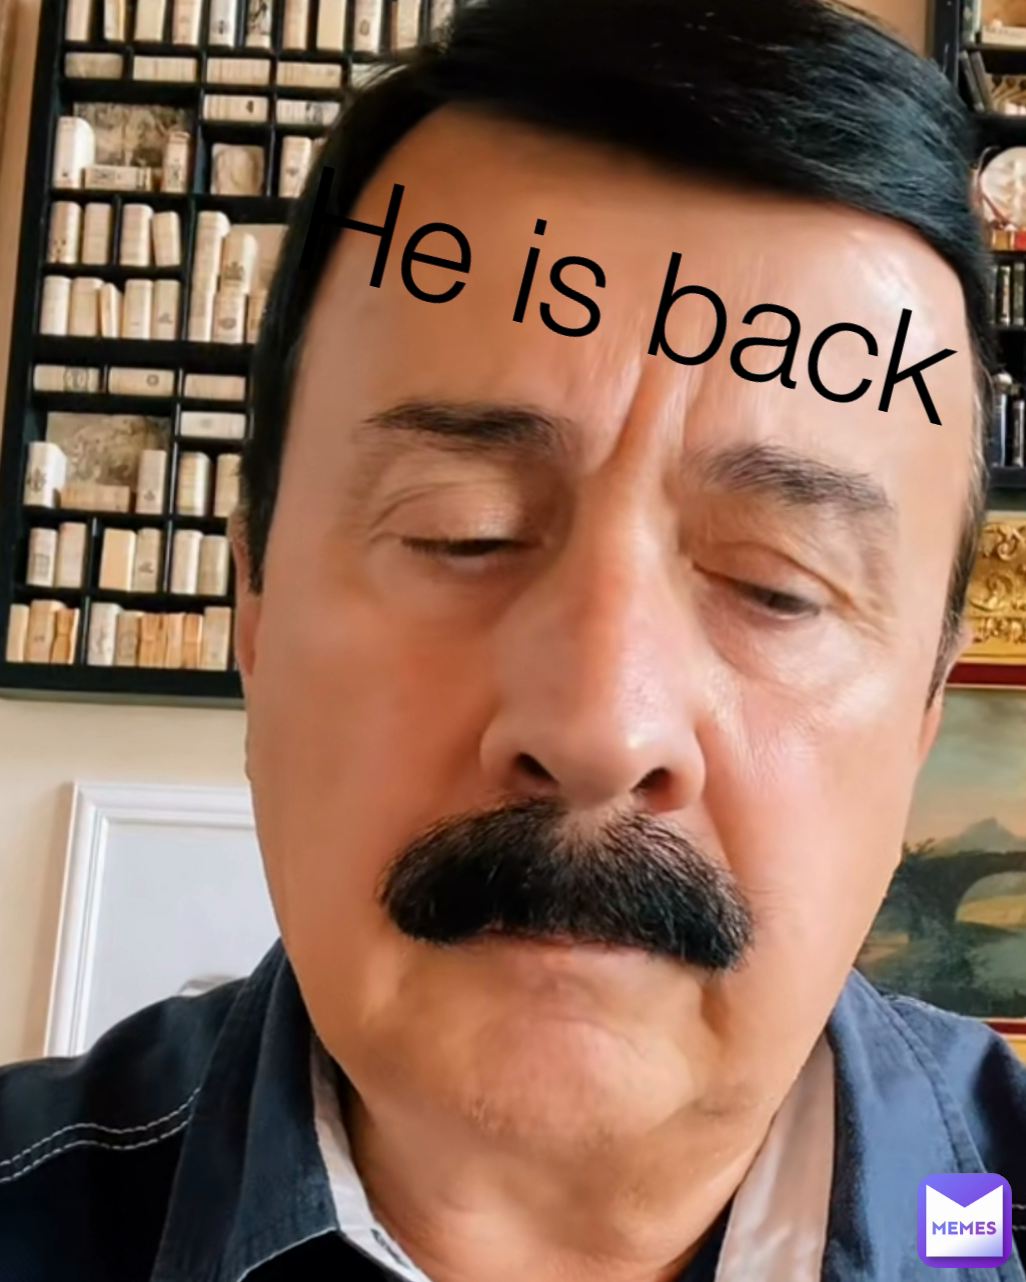 He is back 